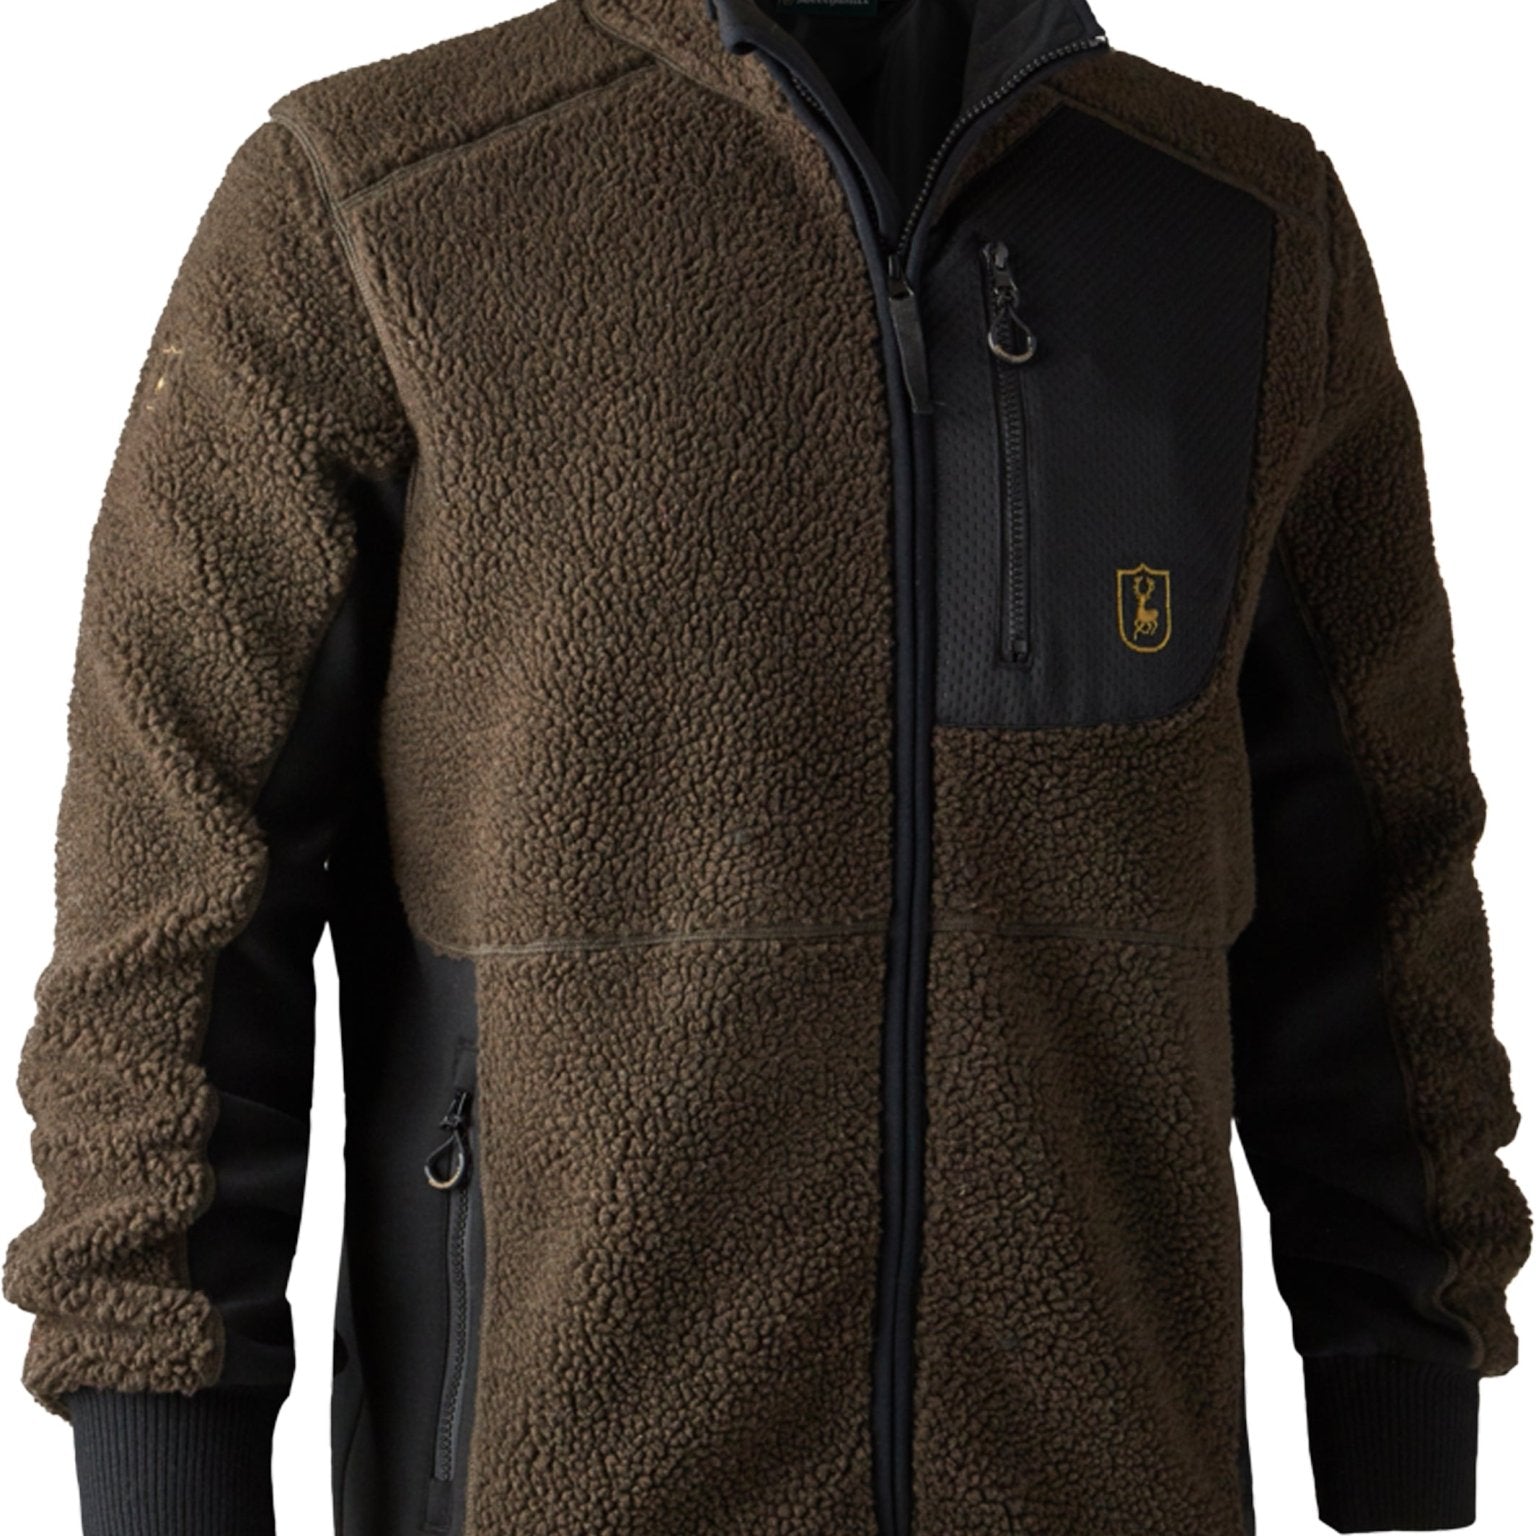 4elementsclothingDeerhunterDeerhunter - Rogaland Fiber Pile Jacket / Breathable, warm Mens JacketOuterwear5125-582-M